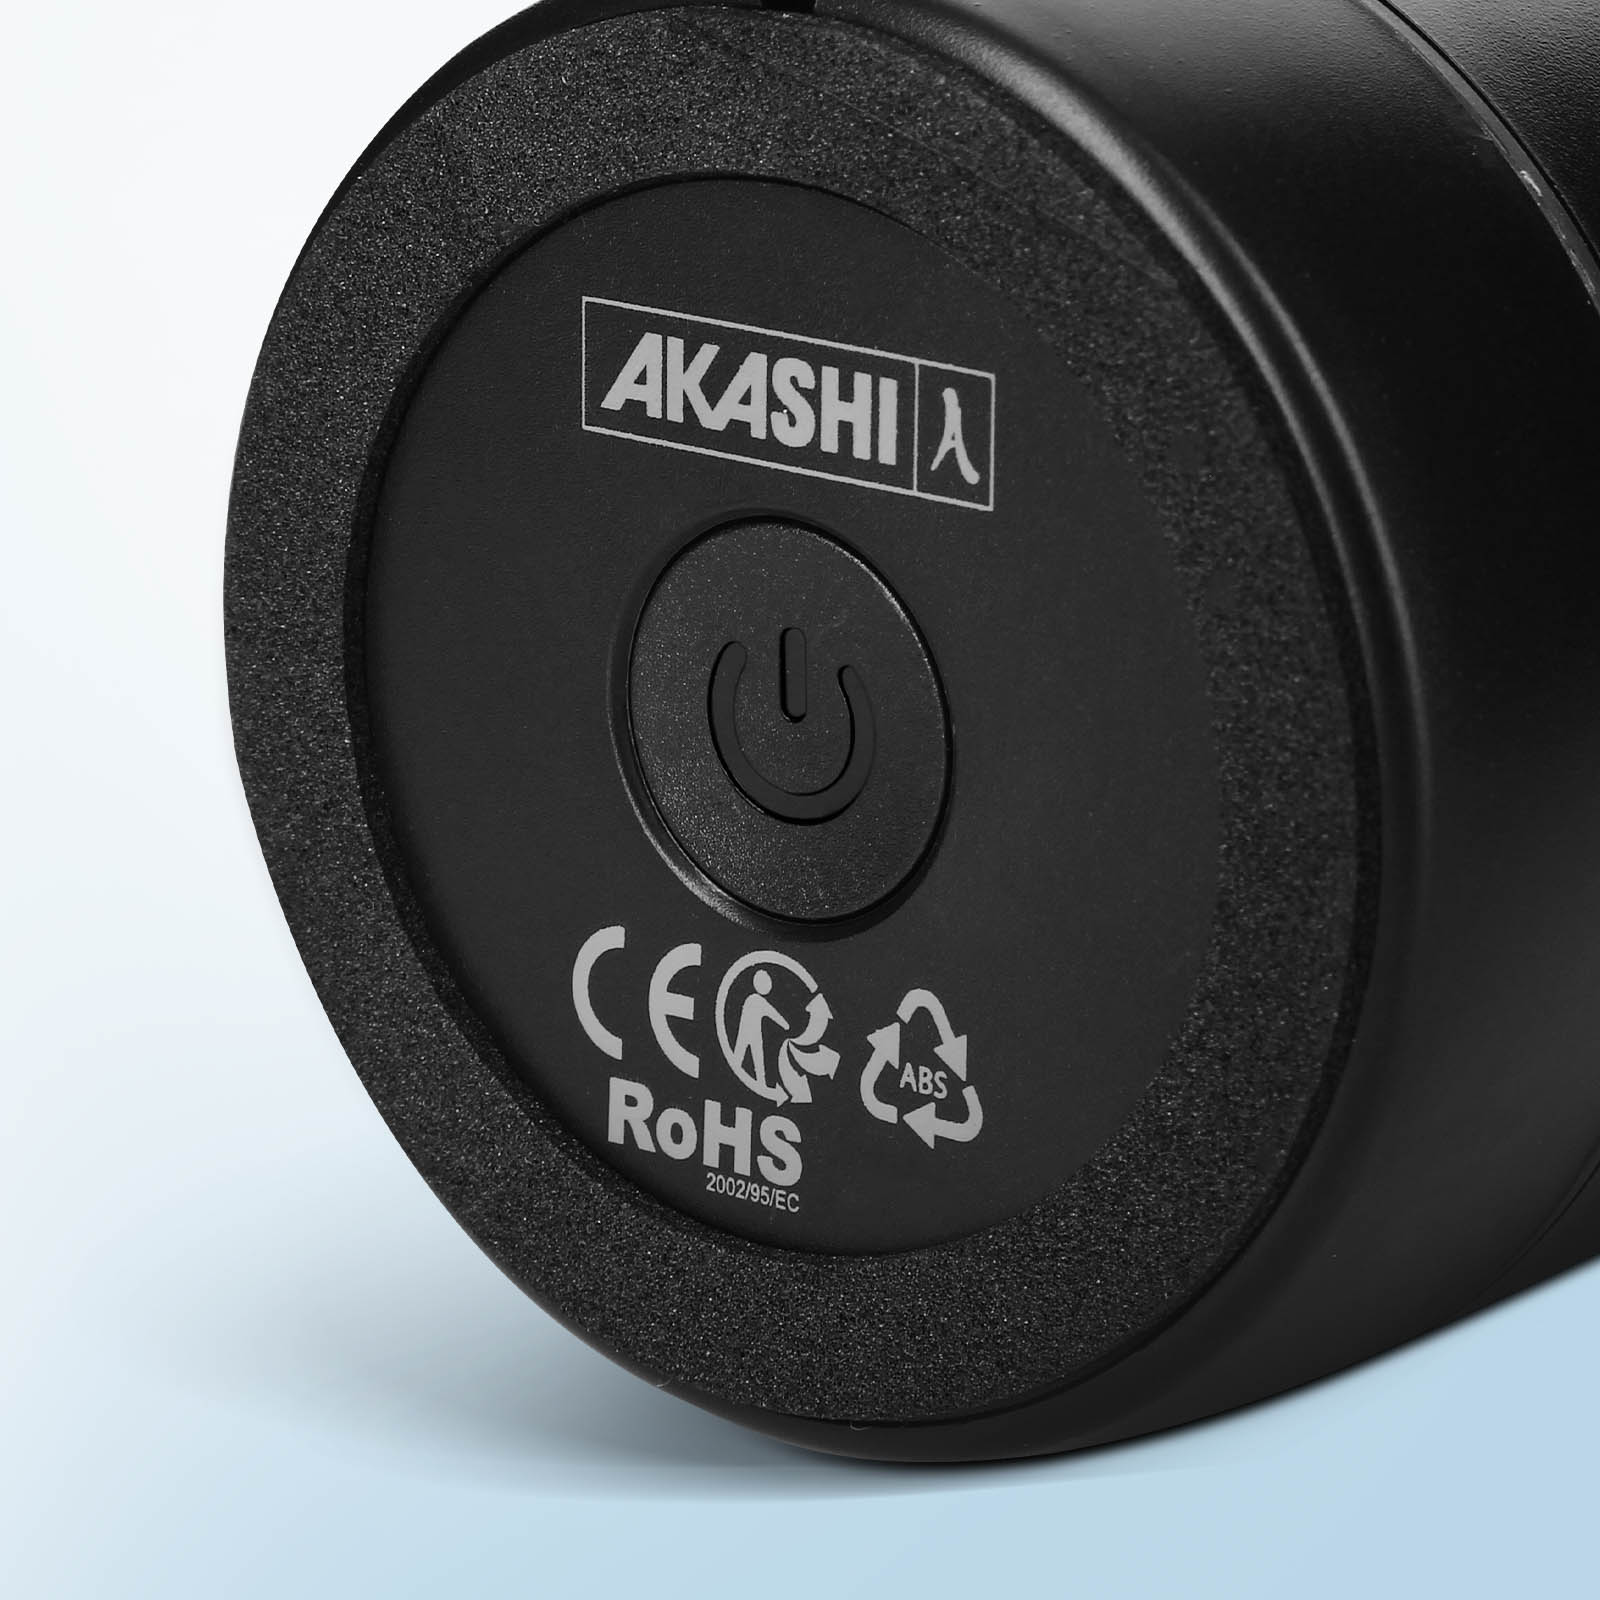 Enceinte portable éco-responsable sans fil Bluetooth 5W - Akashi